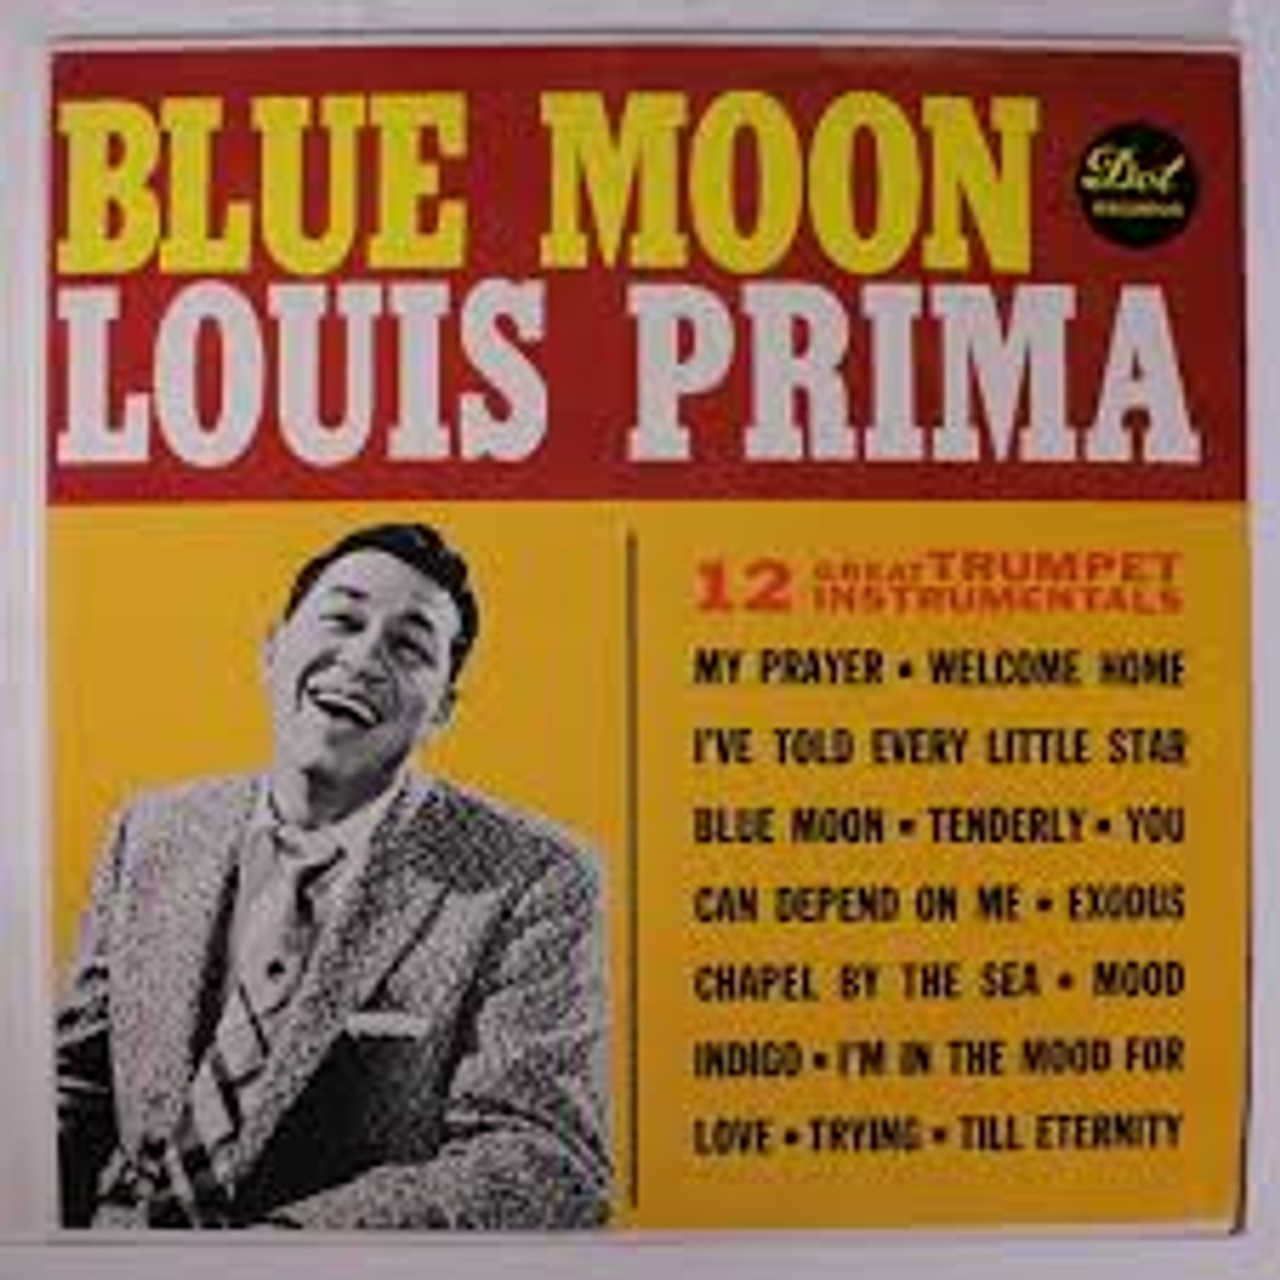 Louis Prima BEST: THE WILDEST Vinyl Record